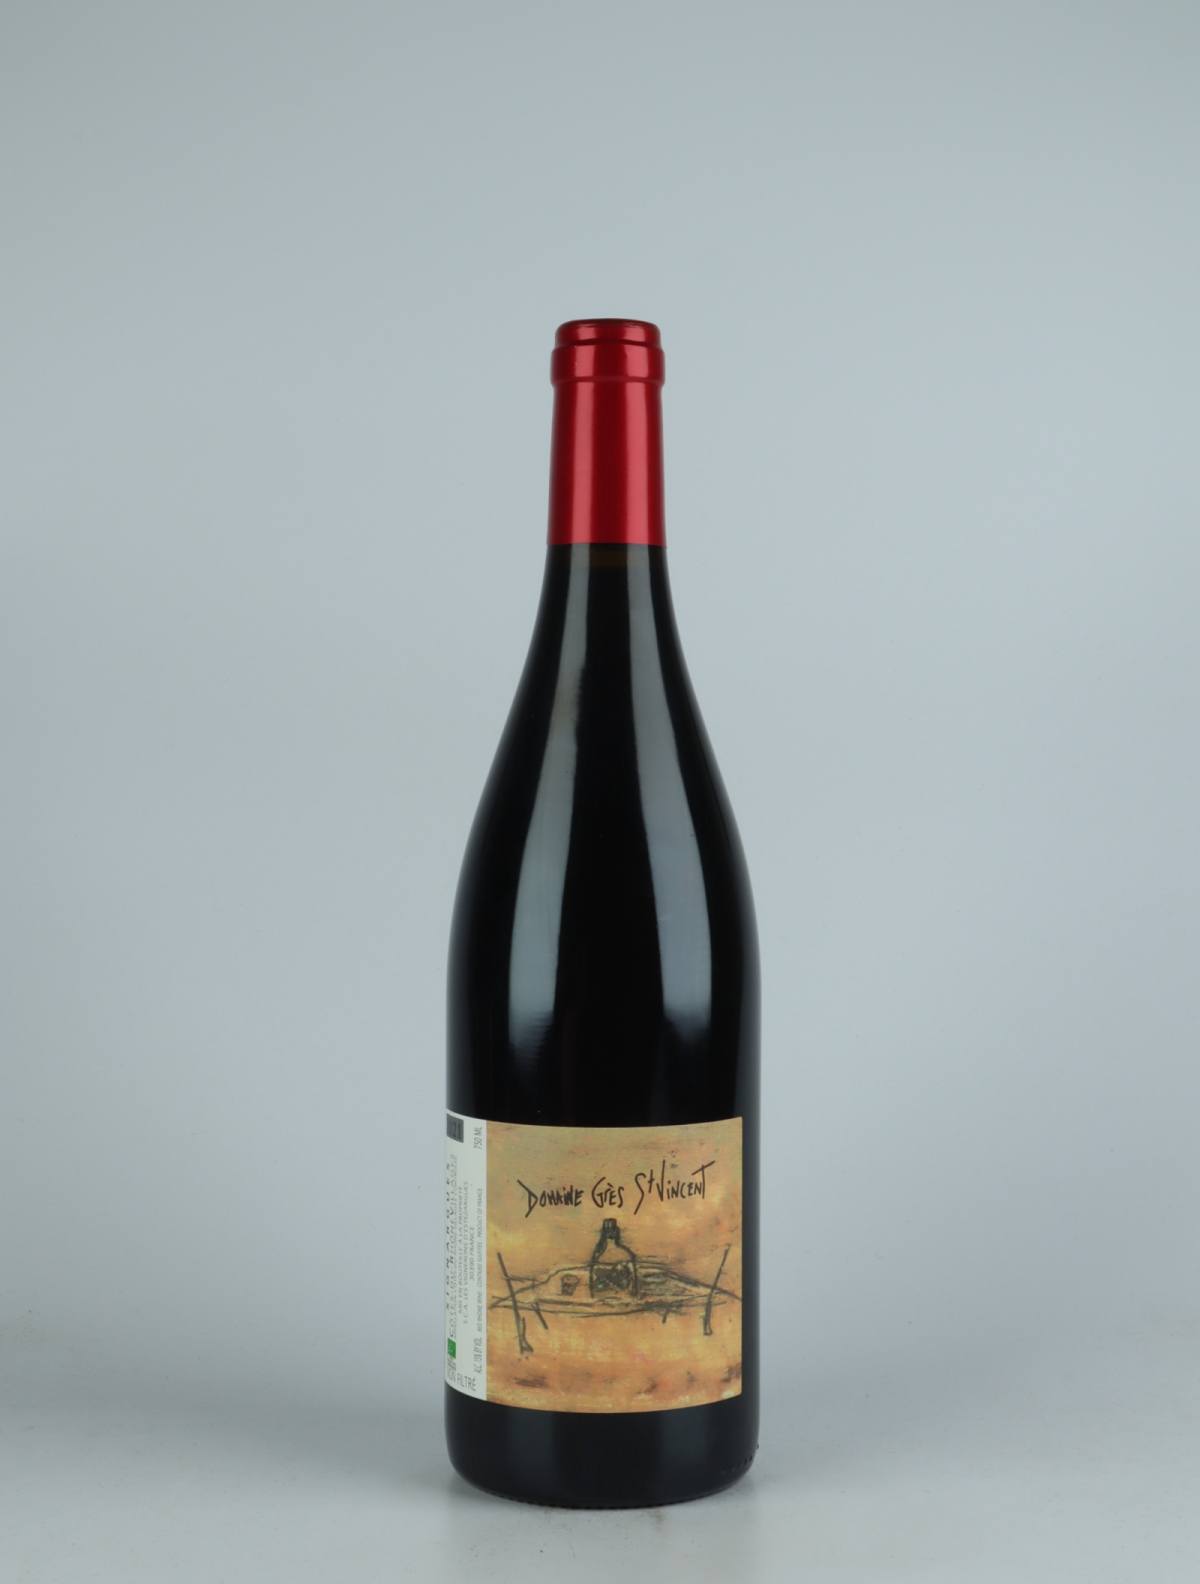 En flaske 2021 Côtes du Rhône - Grès St Vincent Rødvin fra Les Vignerons d’Estézargues, Rhône i Frankrig